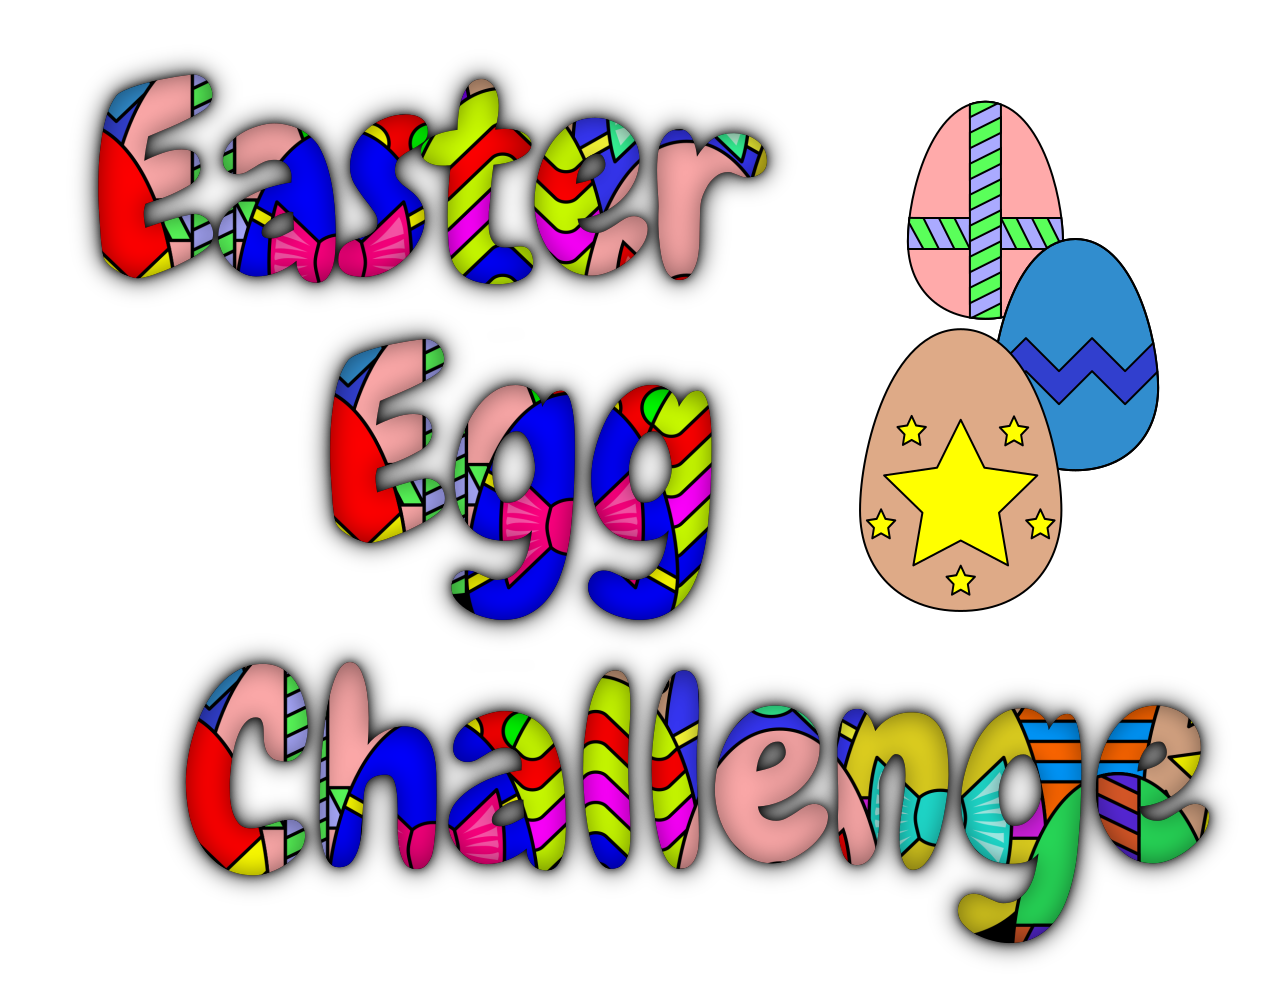 Easter Egg Challenge